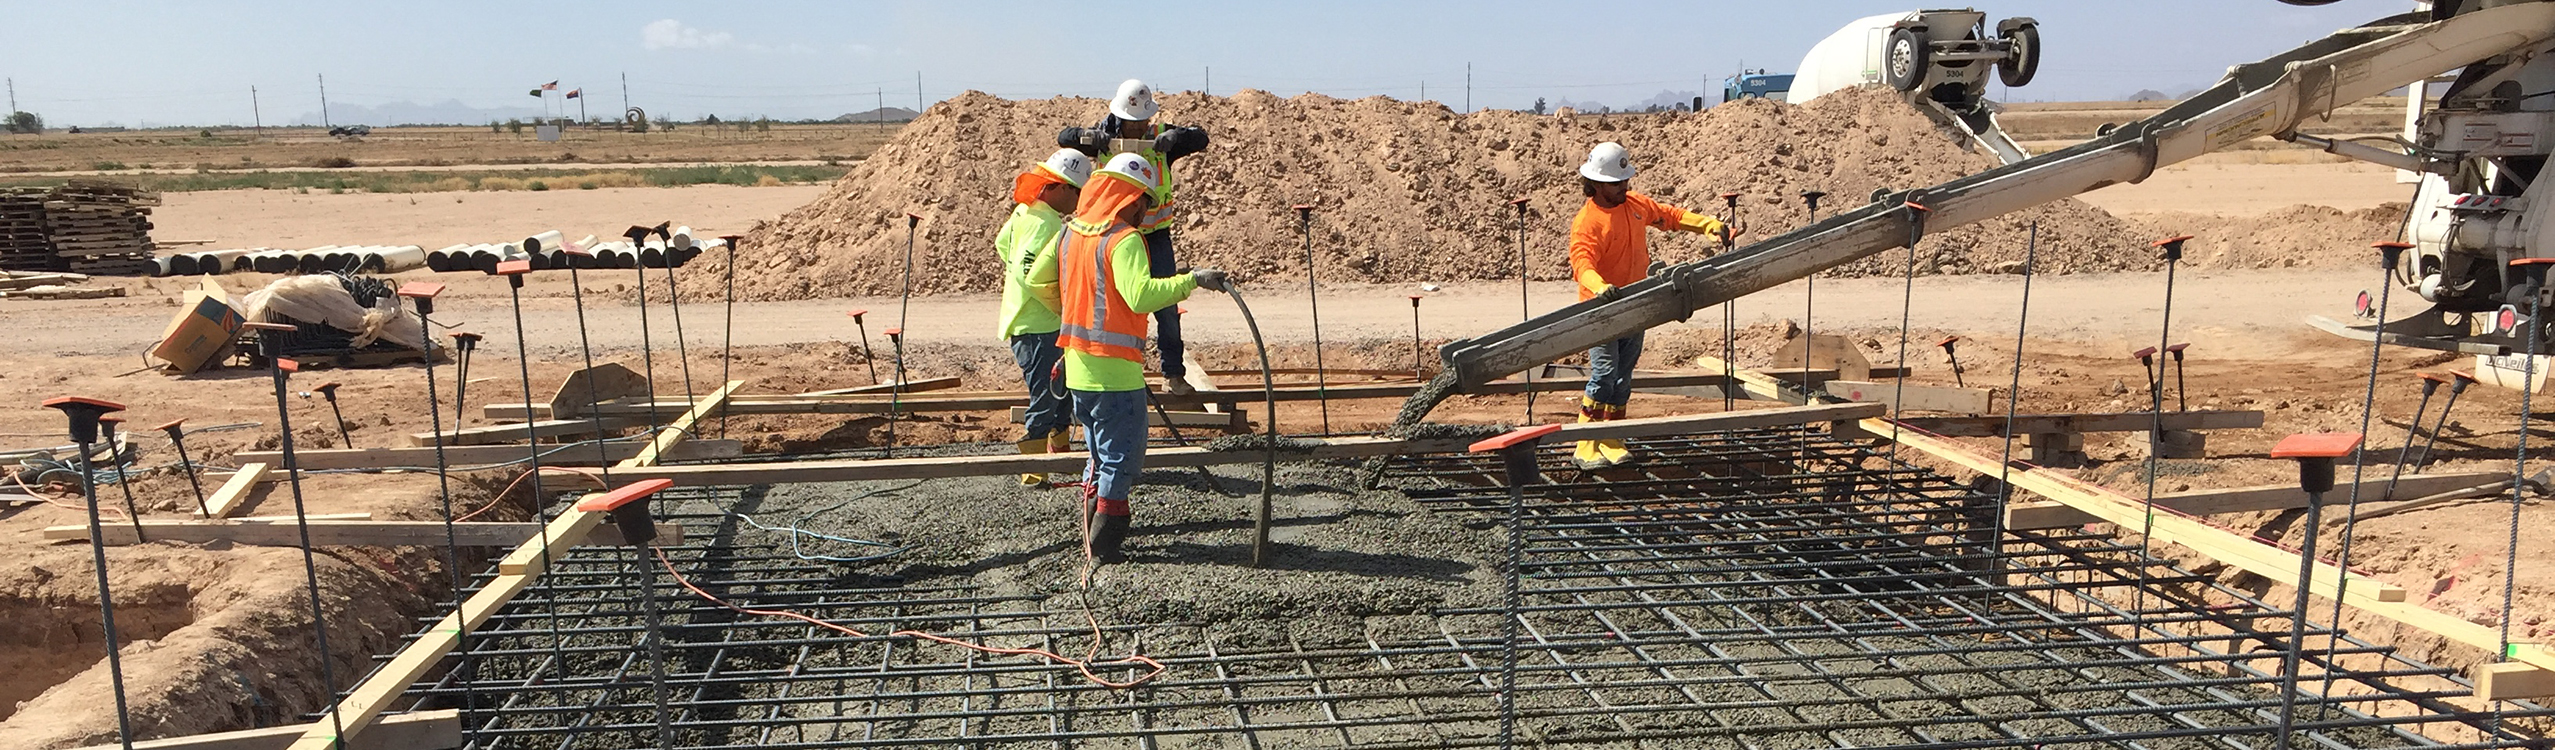 PhoenixMart construction progress accelerates!